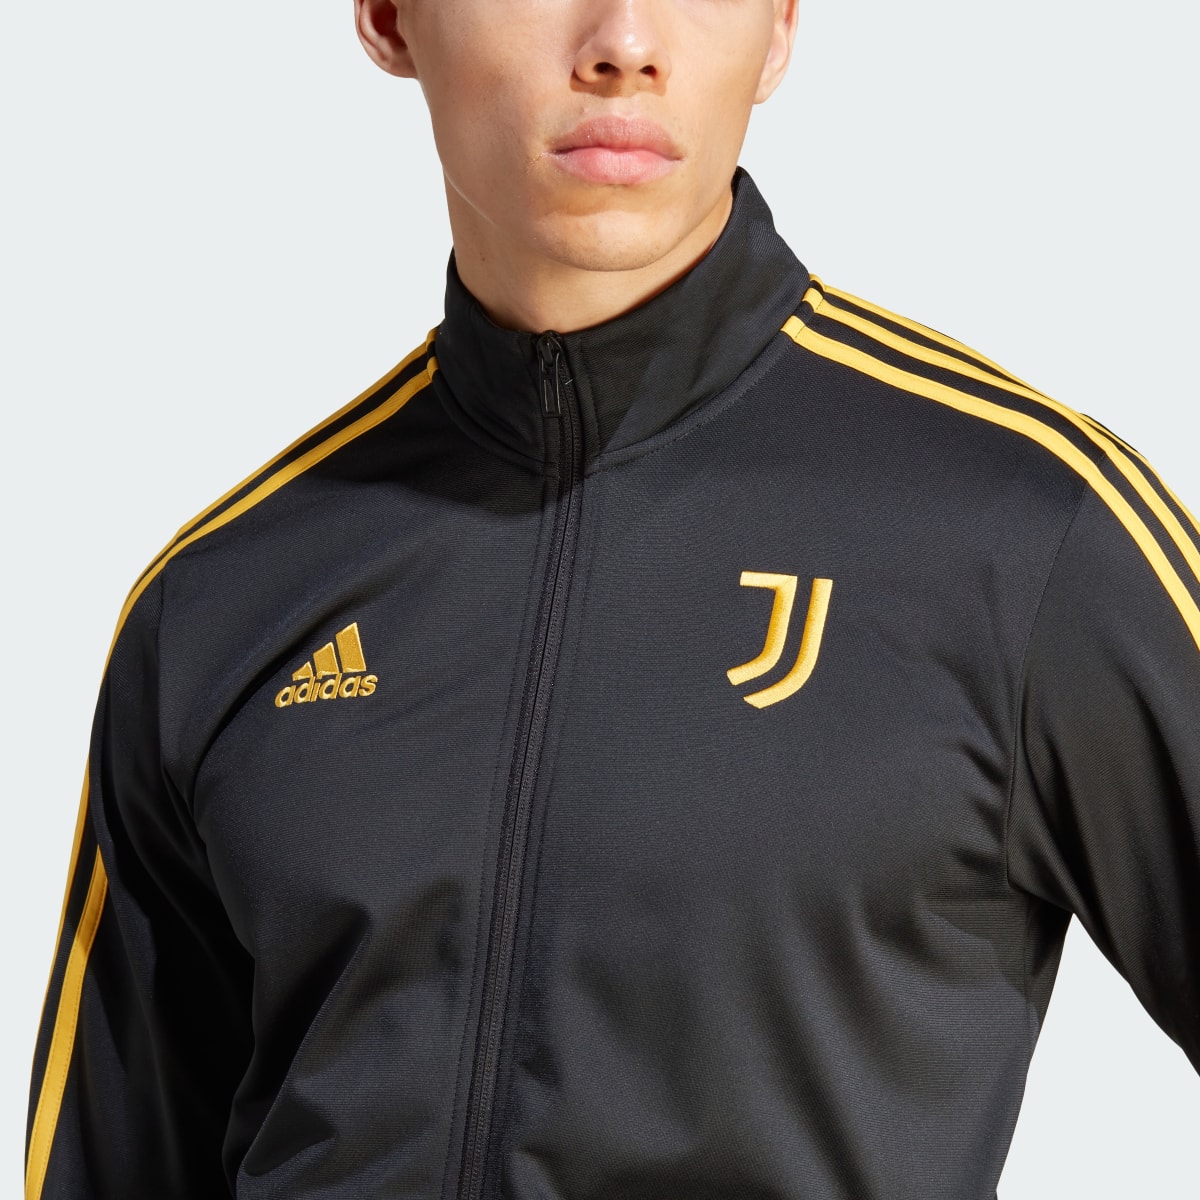 Adidas Track Top Juventus DNA. 6